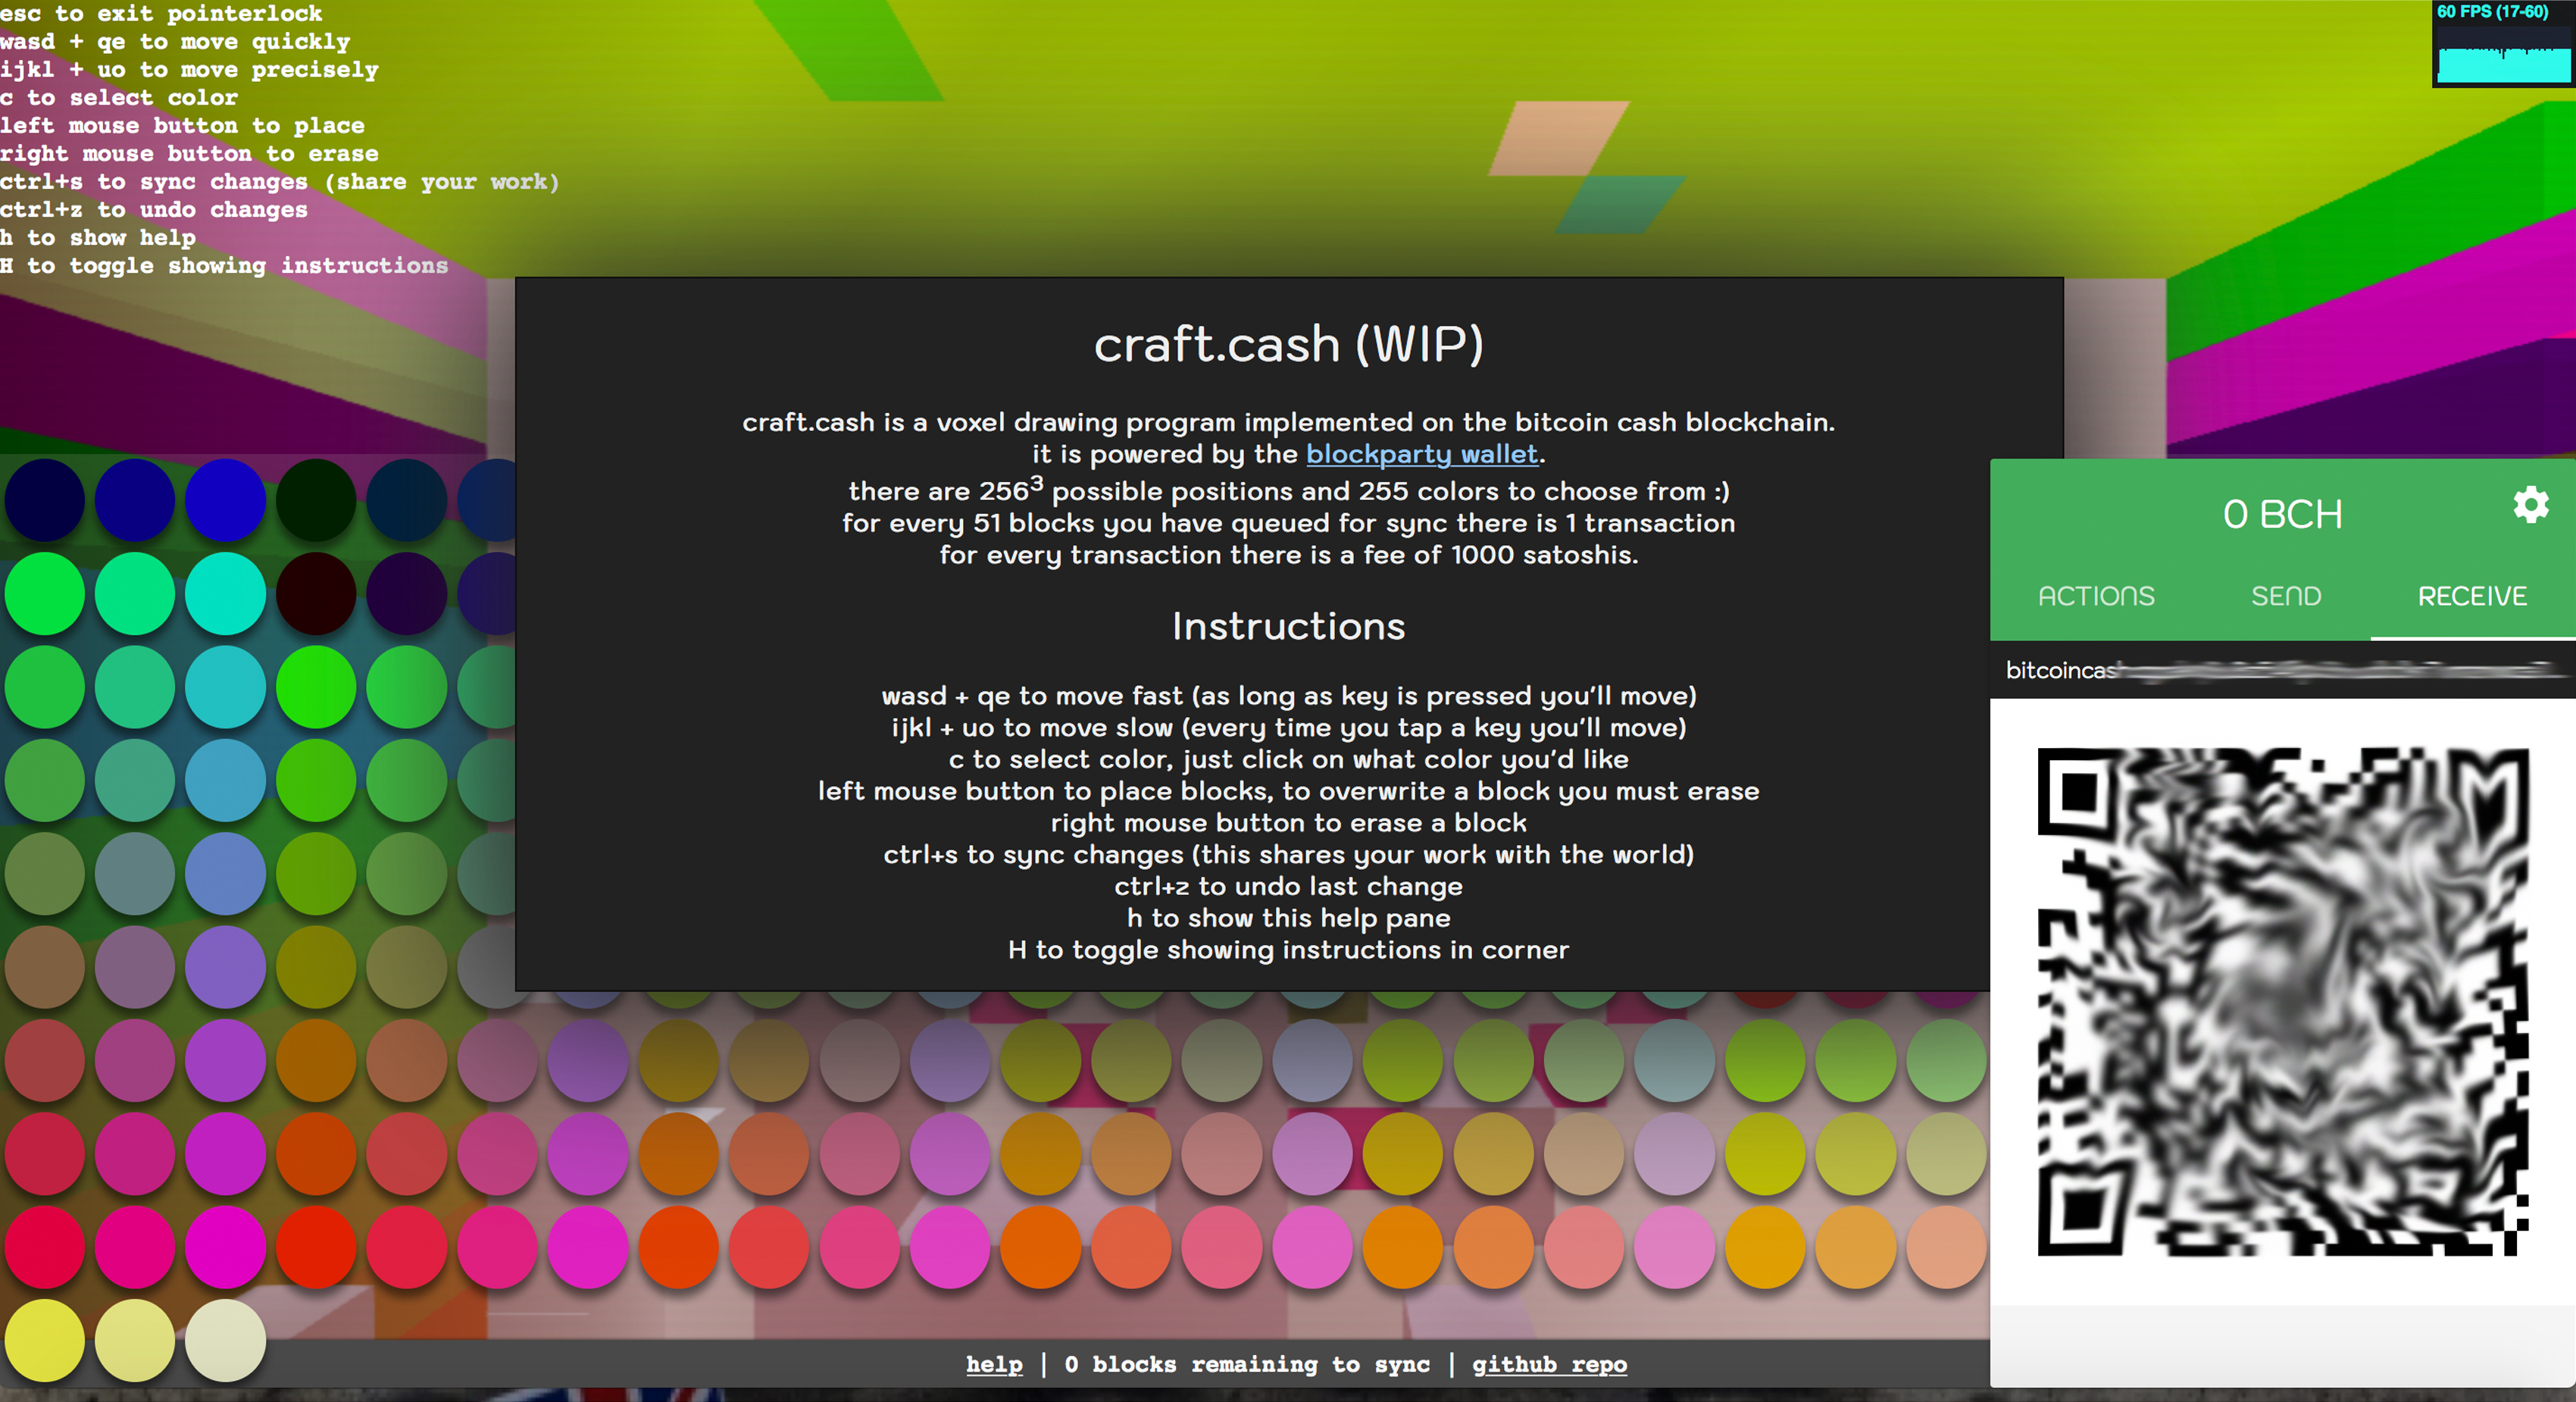 Minecraft-Like Platform Craft.cash Brings a 3D World to Bitcoin Cash 